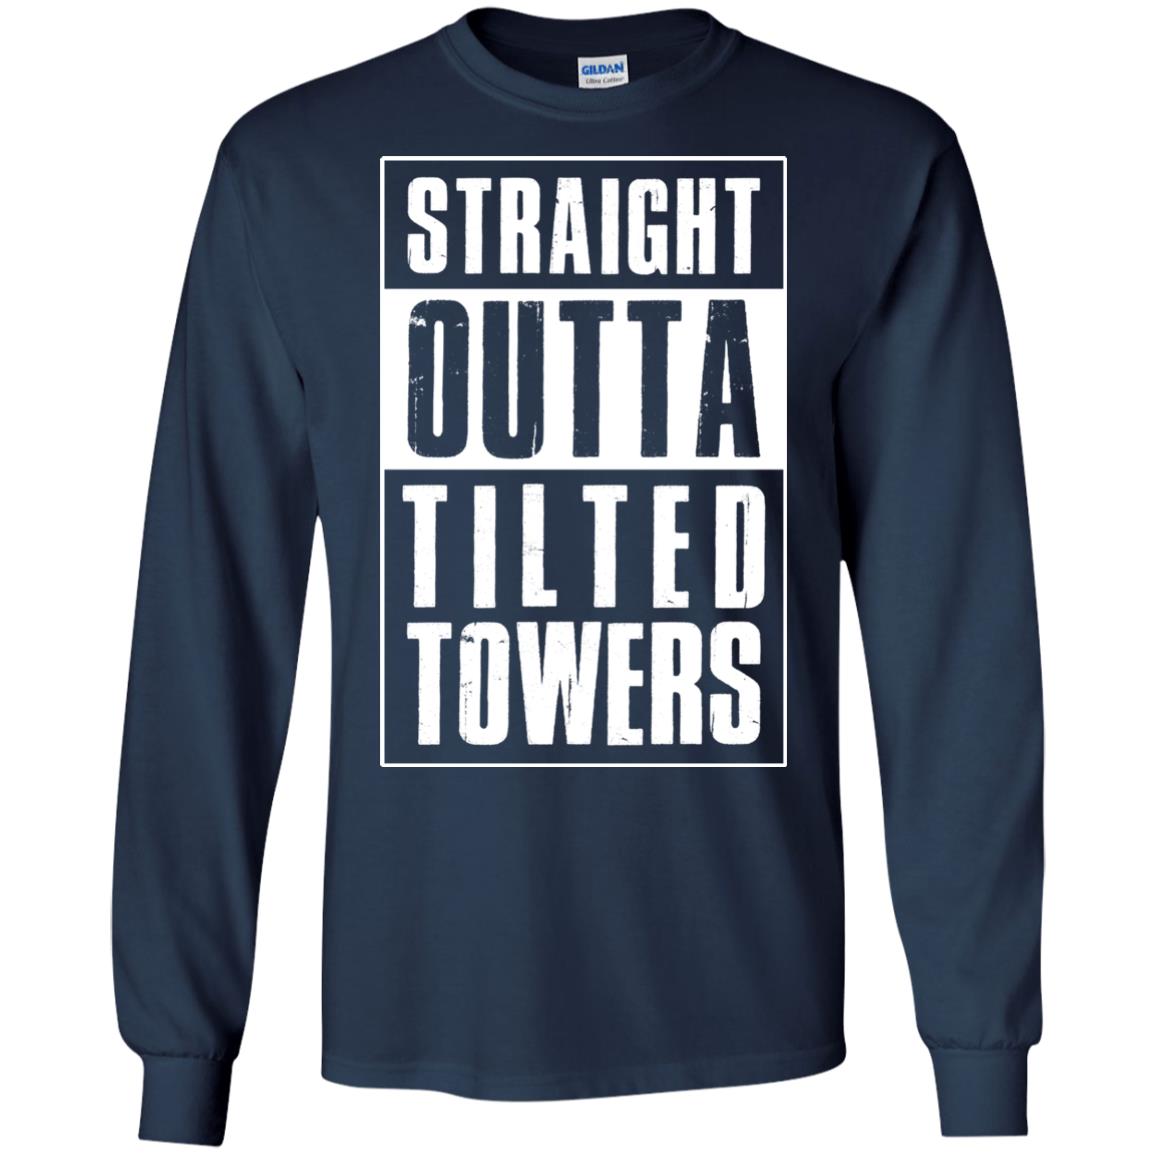 Tilted t shirt,Children's Tilted Towers t shirt in Black/blue 